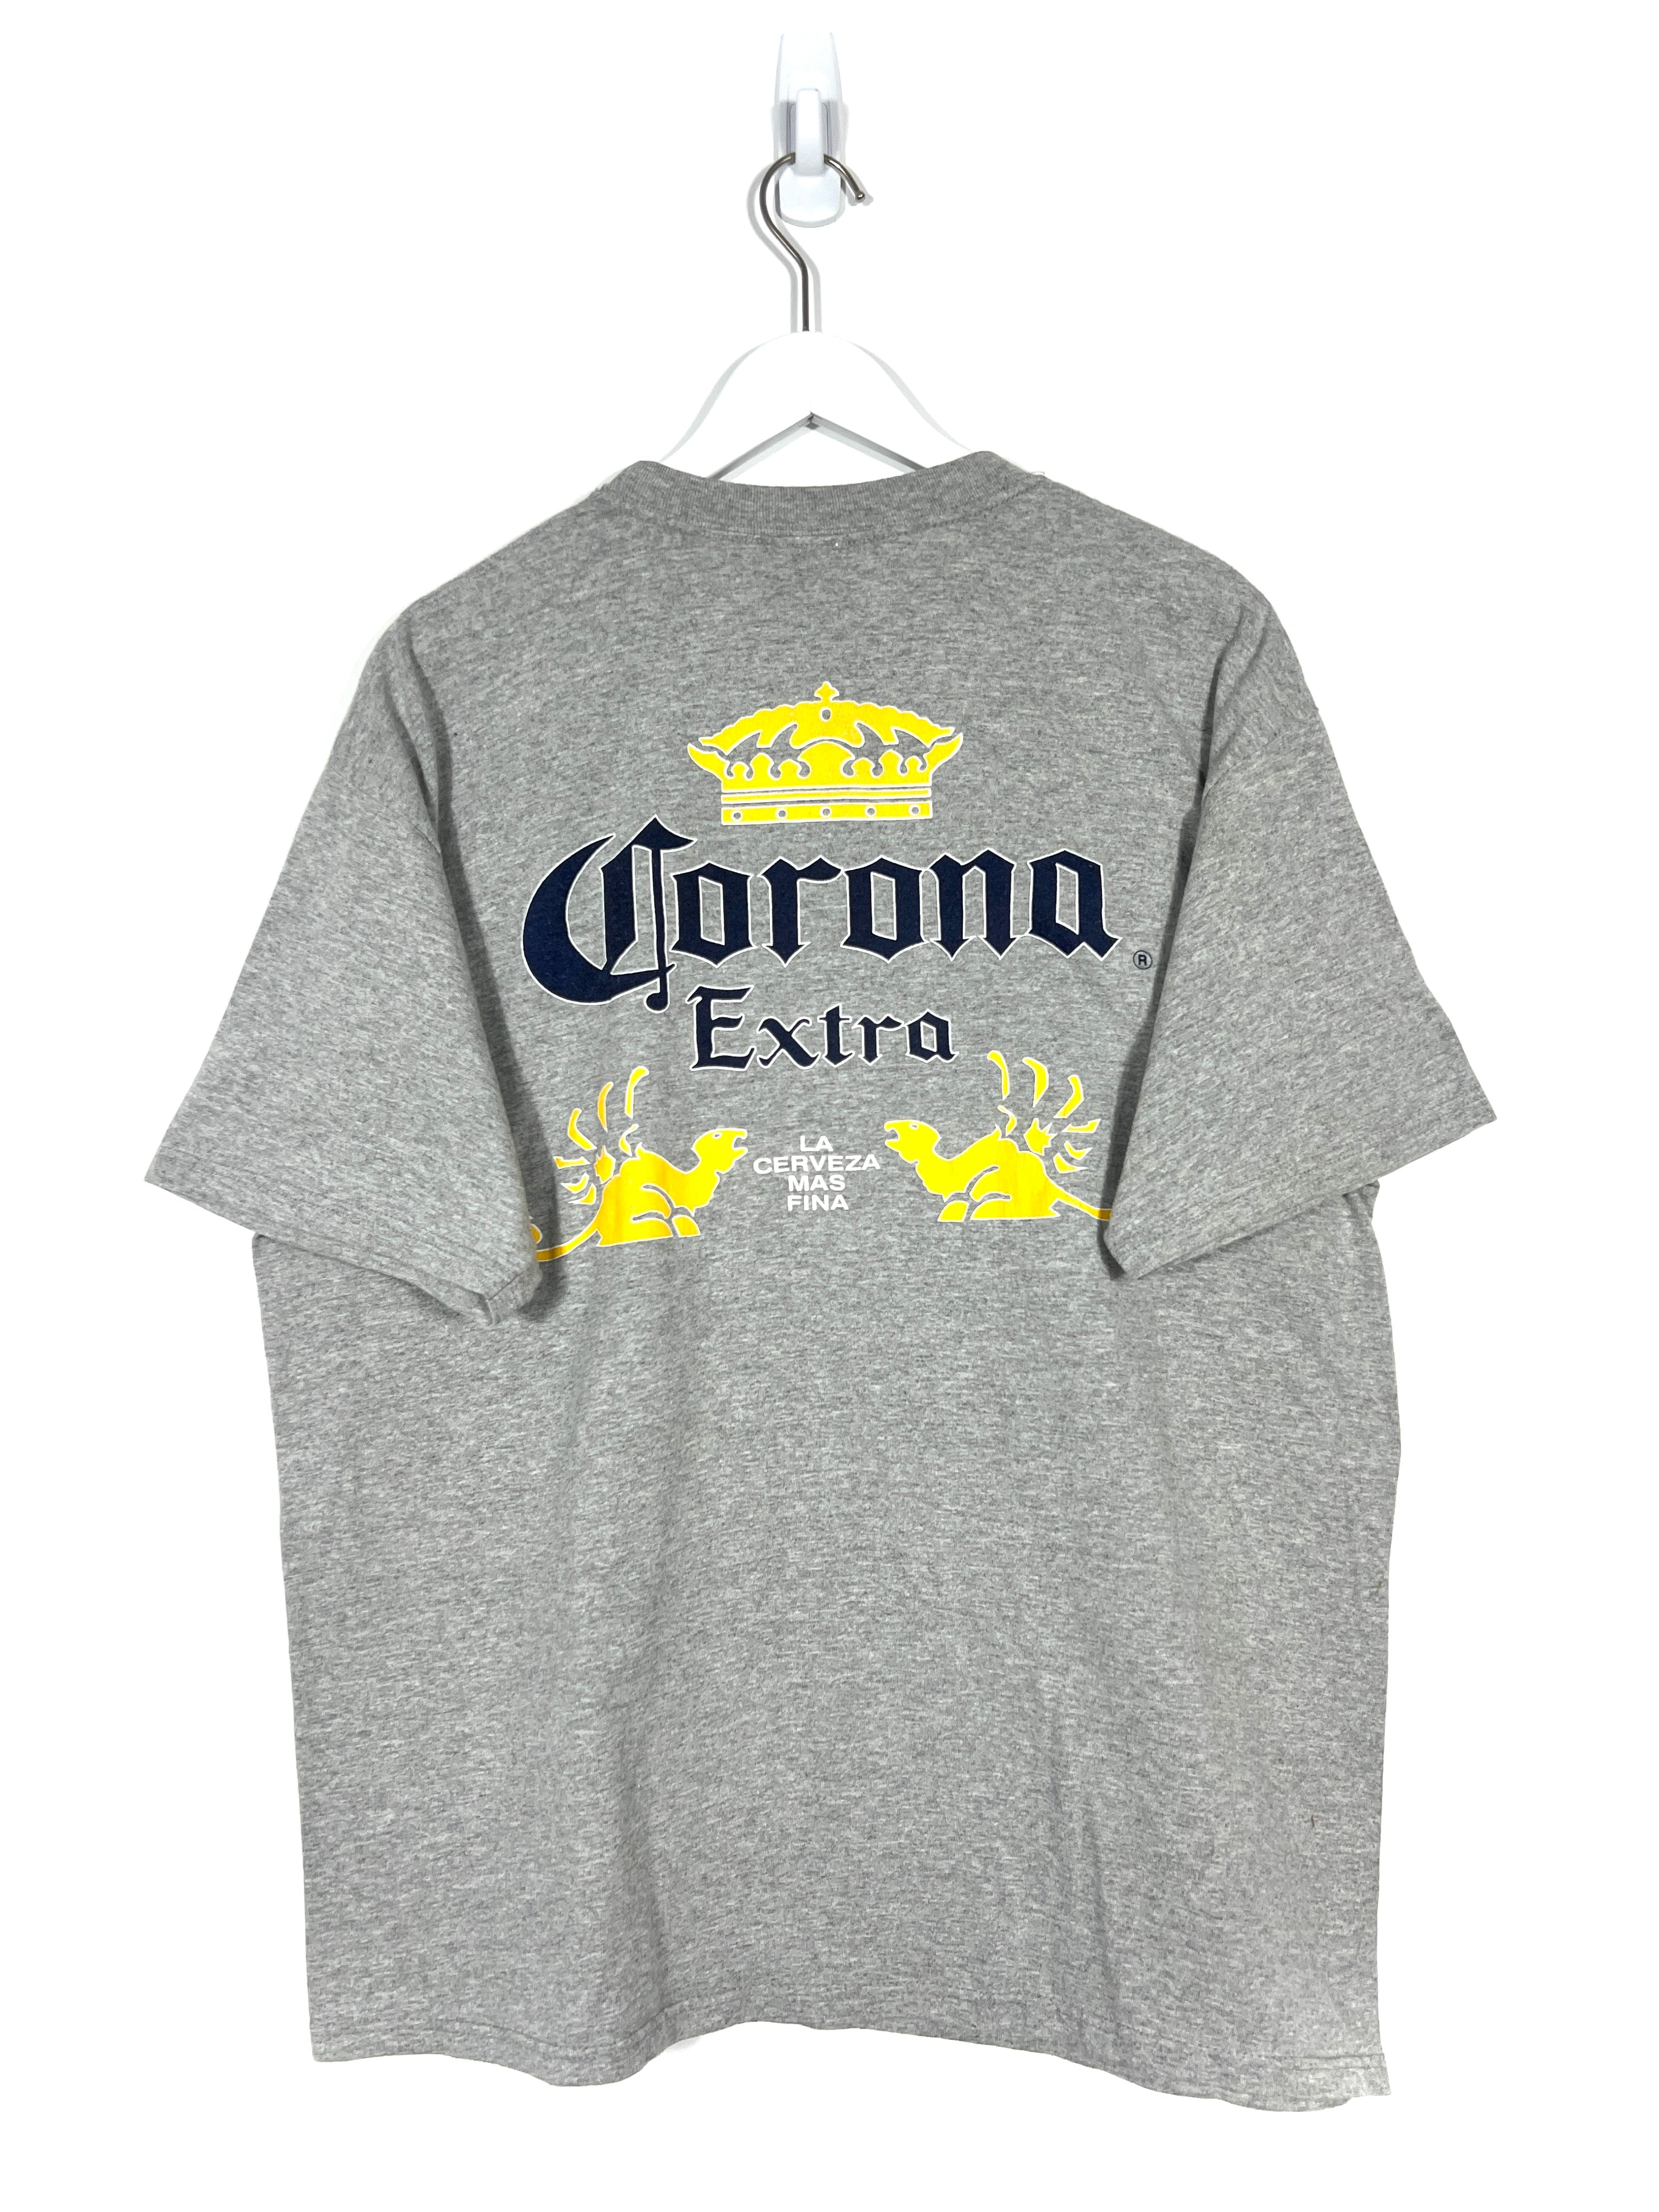 Vintage Corona Tshirt - Men's XL